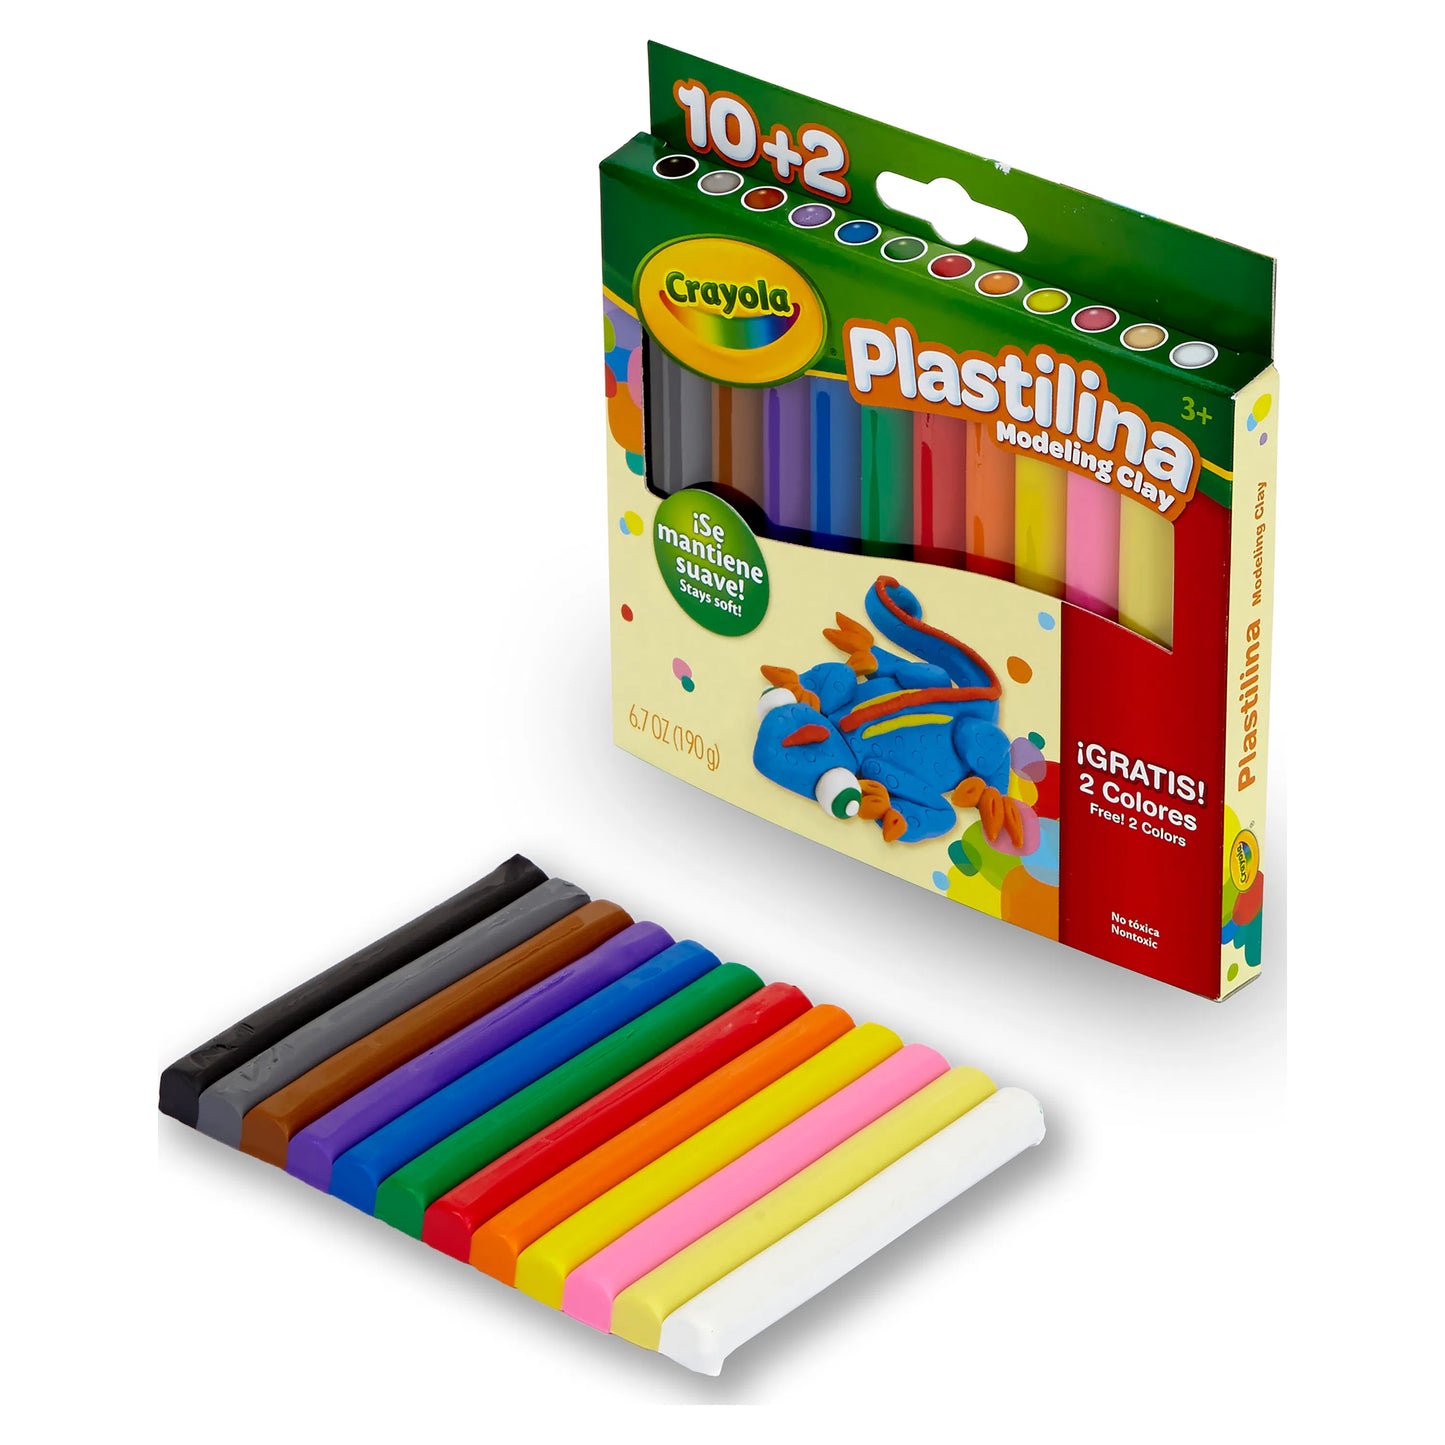 Crayola Plastilina Modelling Clay (12 count)